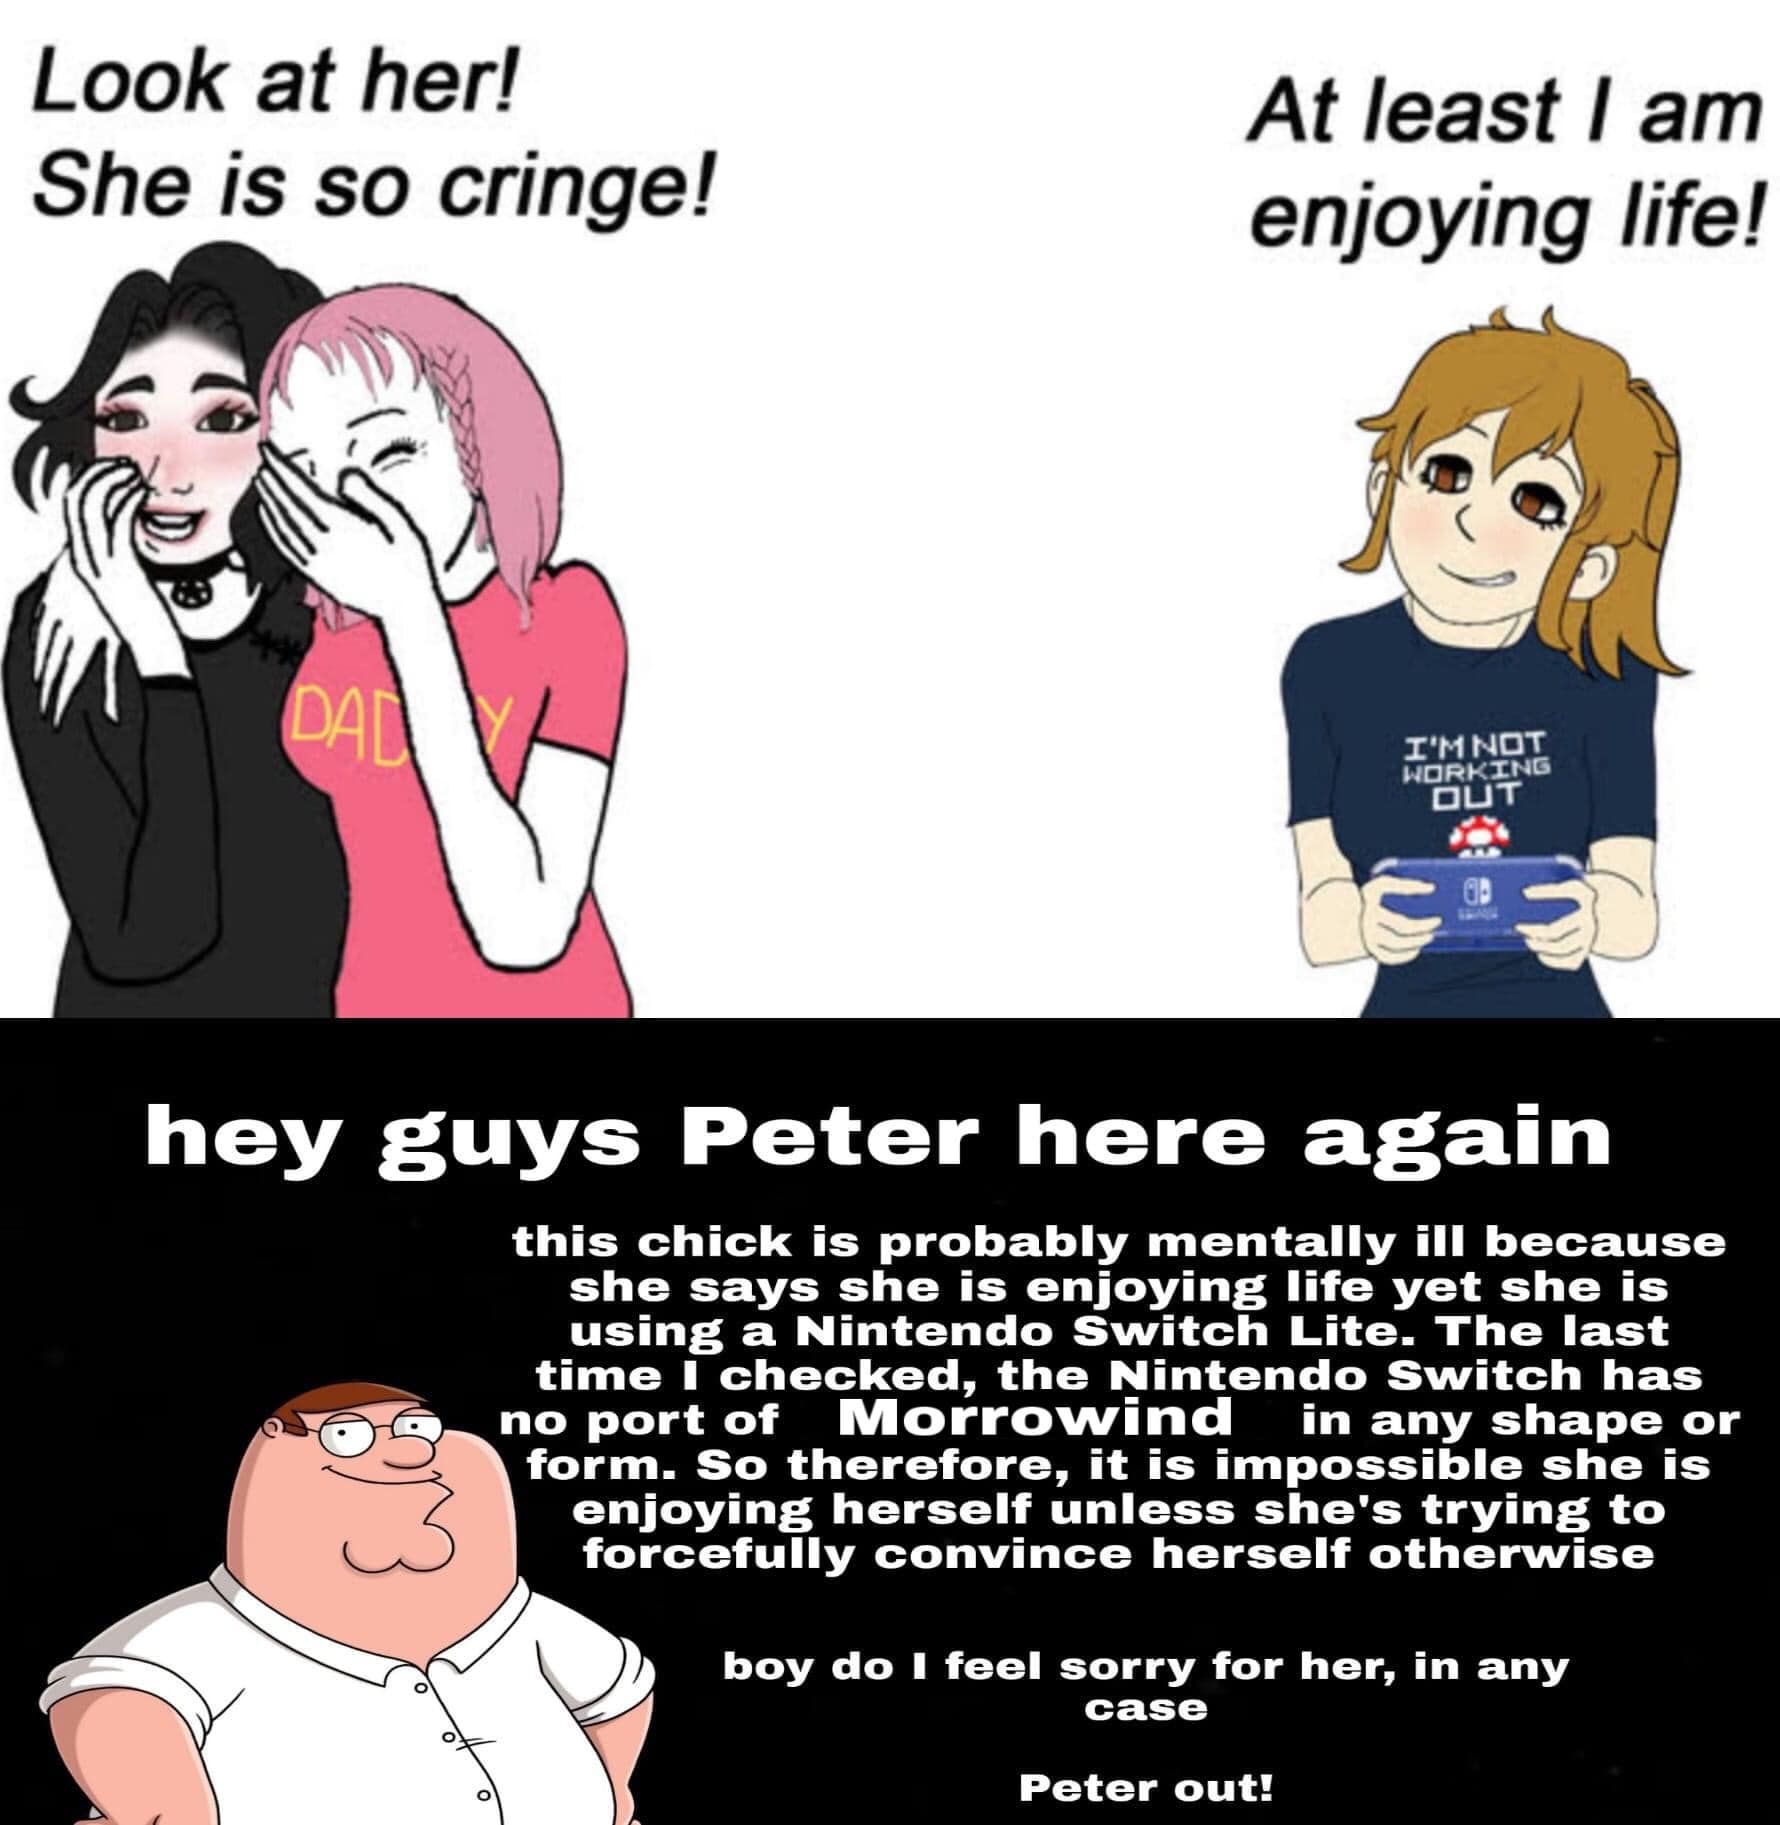 TY Peter